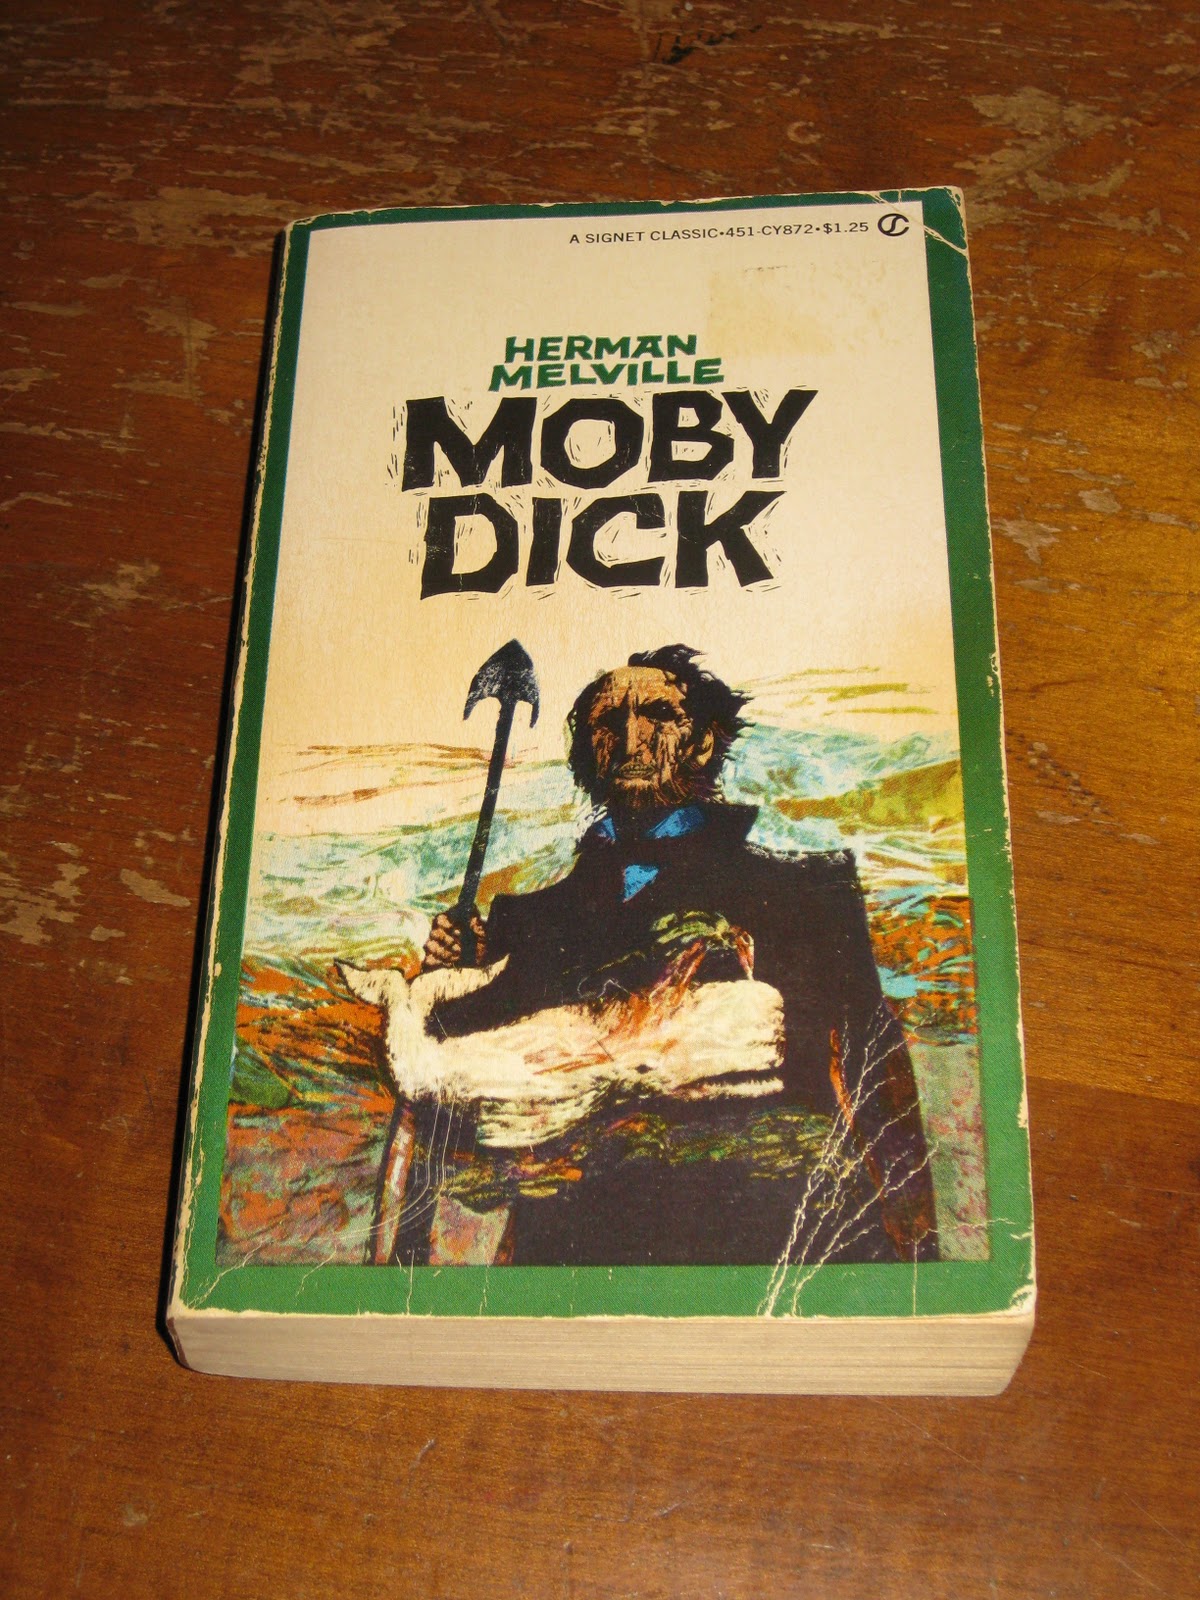 Moby dick sucks